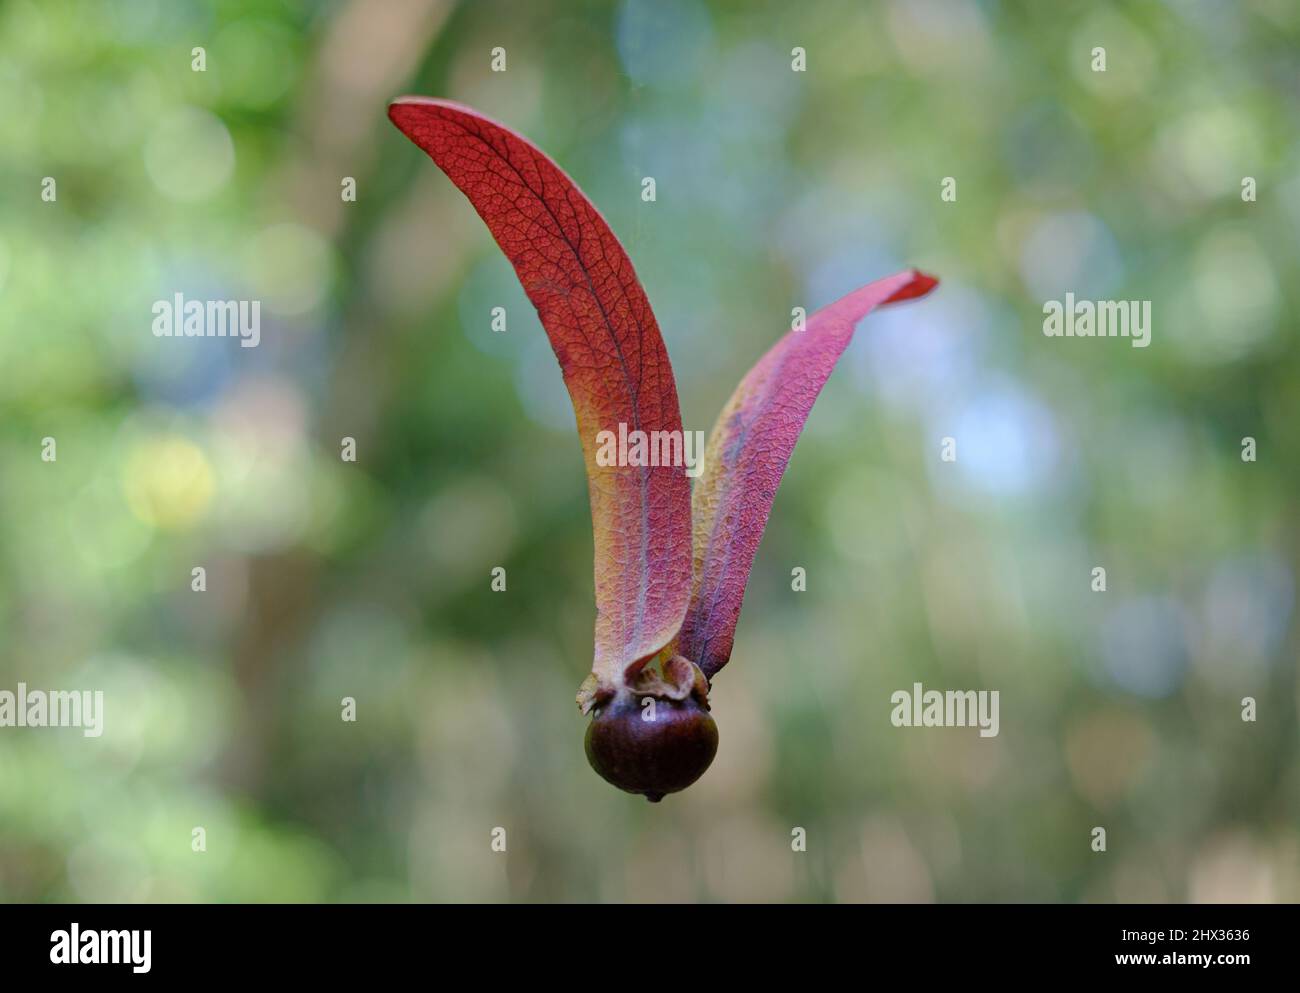 Gurjan, Keruing, Yang Naa seed on blur background, scientific name Dipterocarpus alatus Roxb Stock Photo